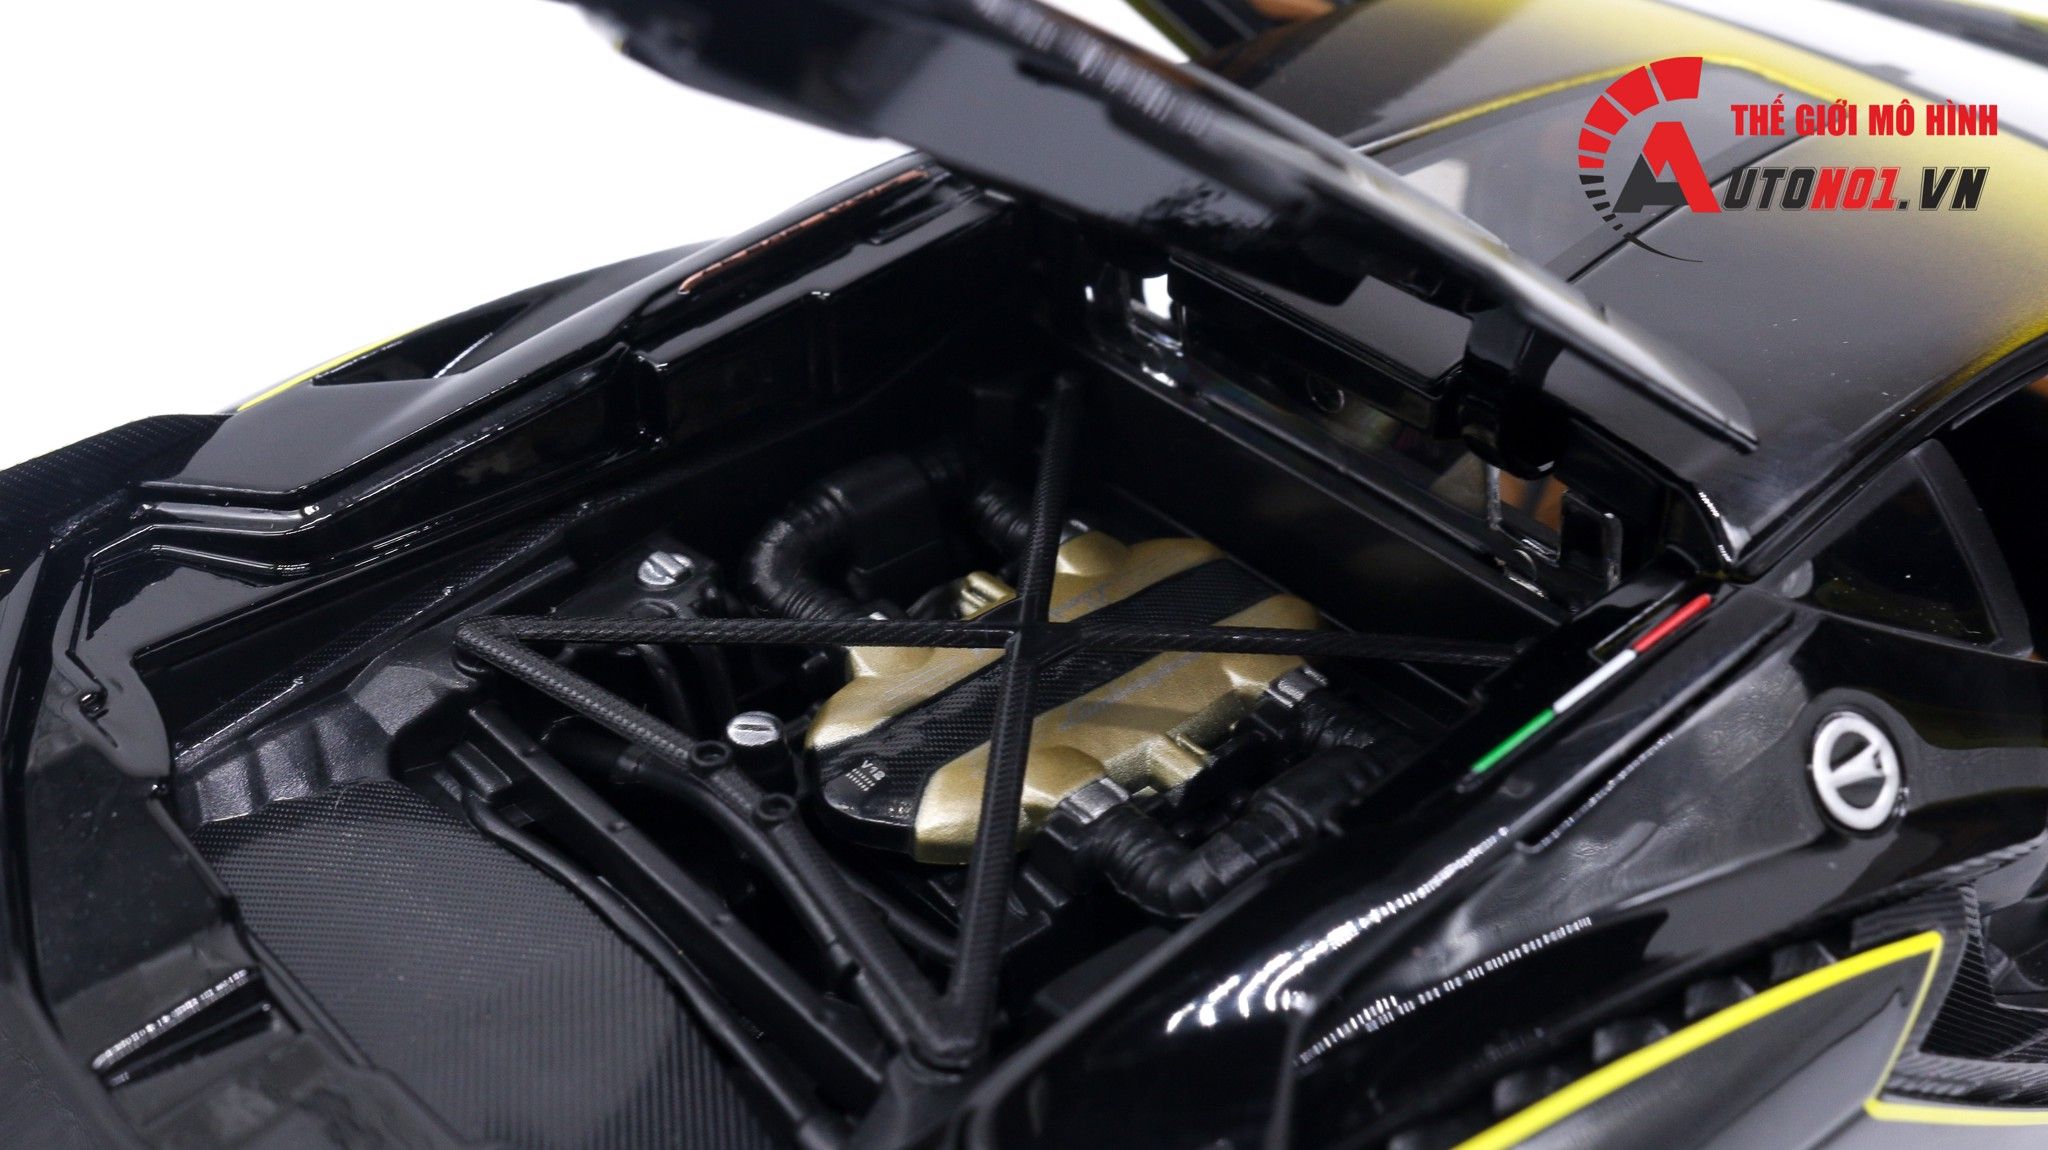  Mô hình xe Lamborghini Sian Fkp 37 Black Yellow 1:18 Bburago 7517 